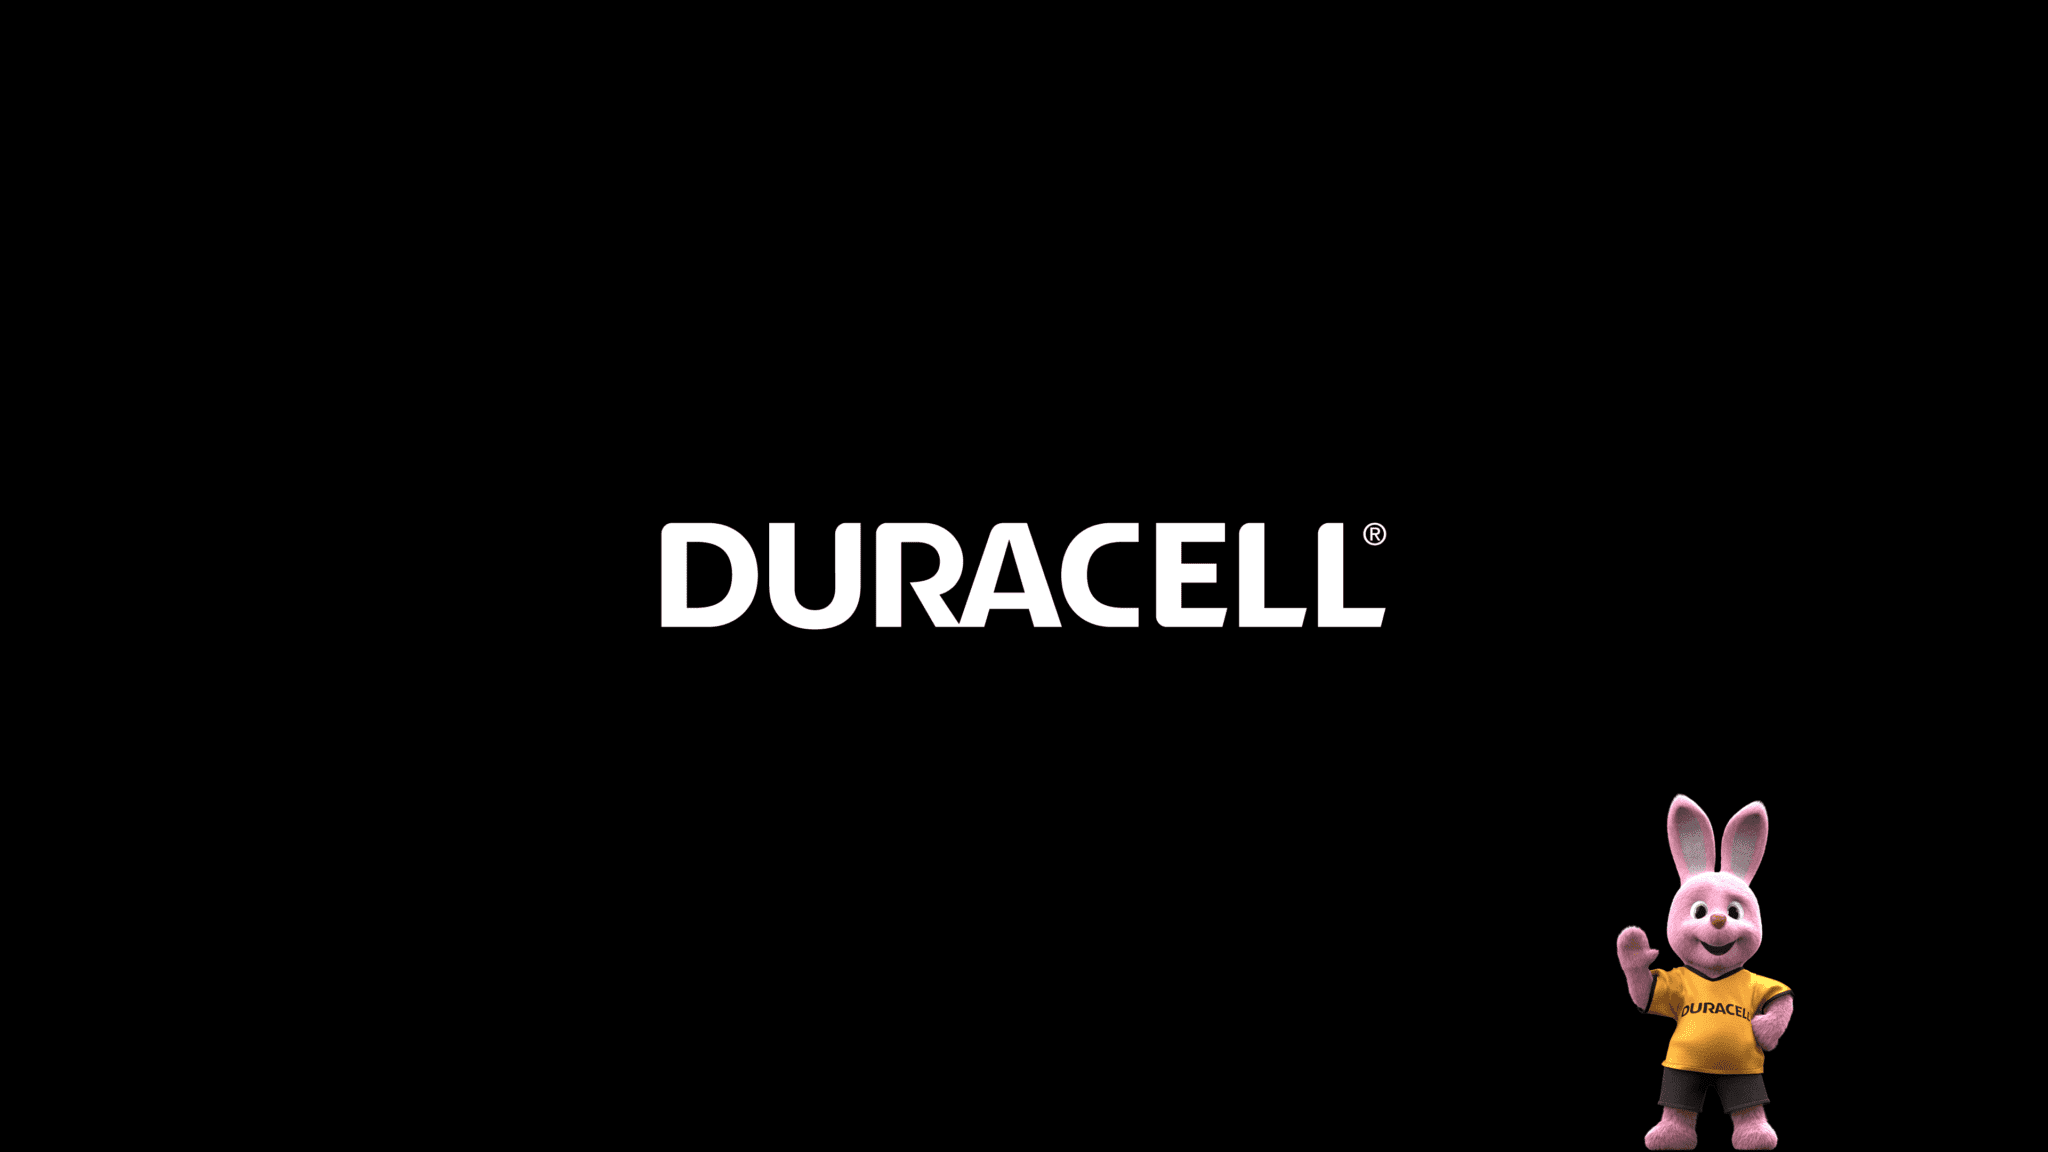 Duracell website banner by Bluestone98